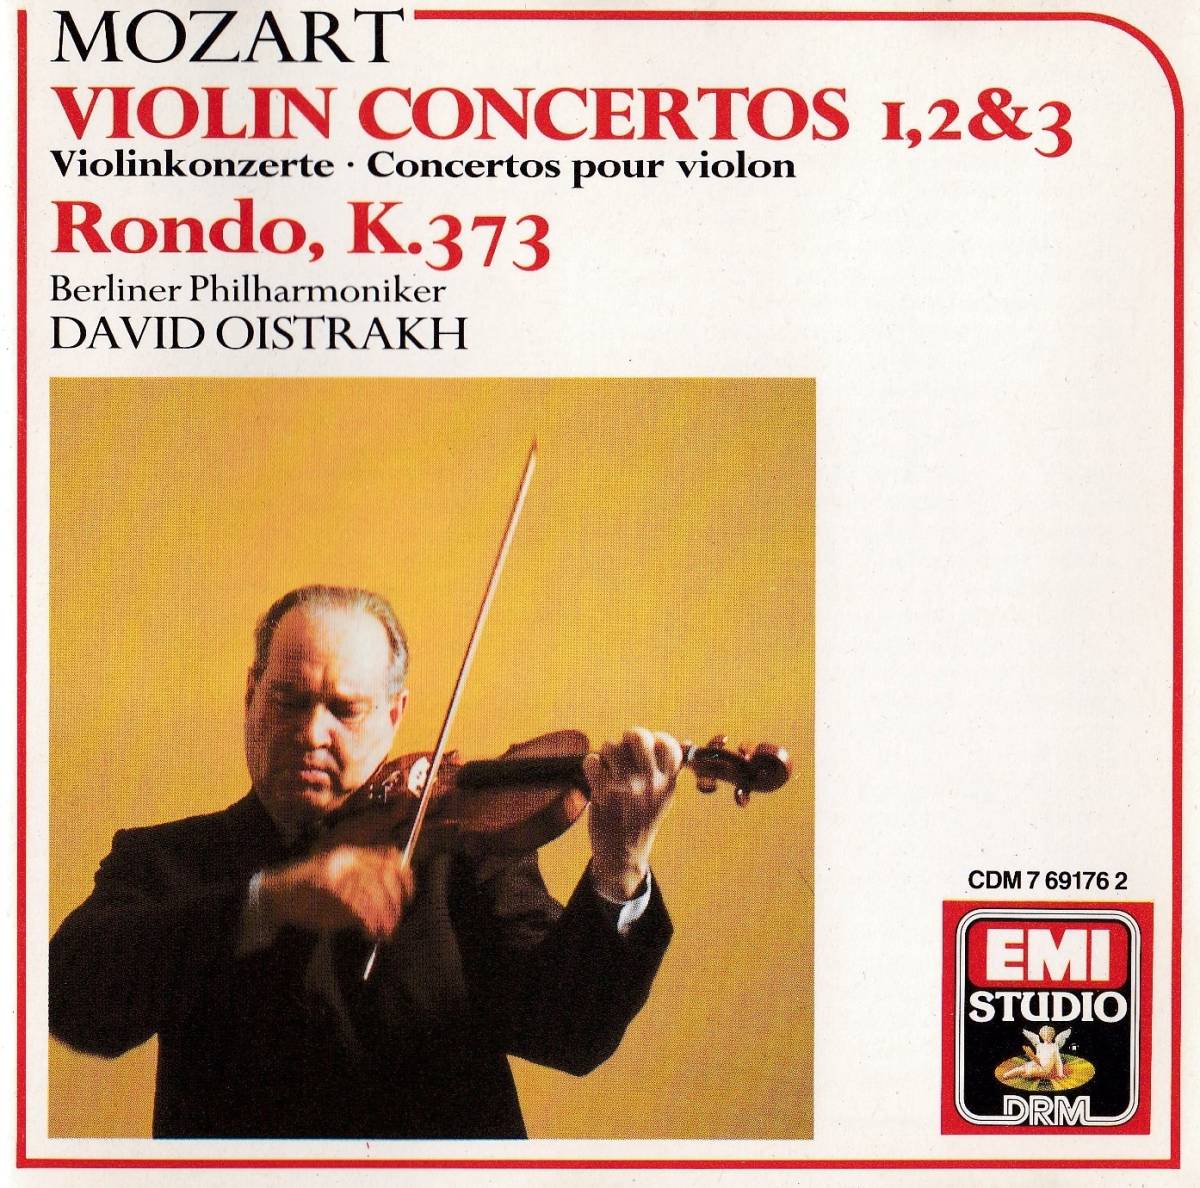 Музыка скрипка моцарт. Mozart Violin. Моцарт со скрипкой. Mozart - the Violin Concertos. Arabella Steinbacher / Mozart: Violin Concertos nos. 1 & 2.